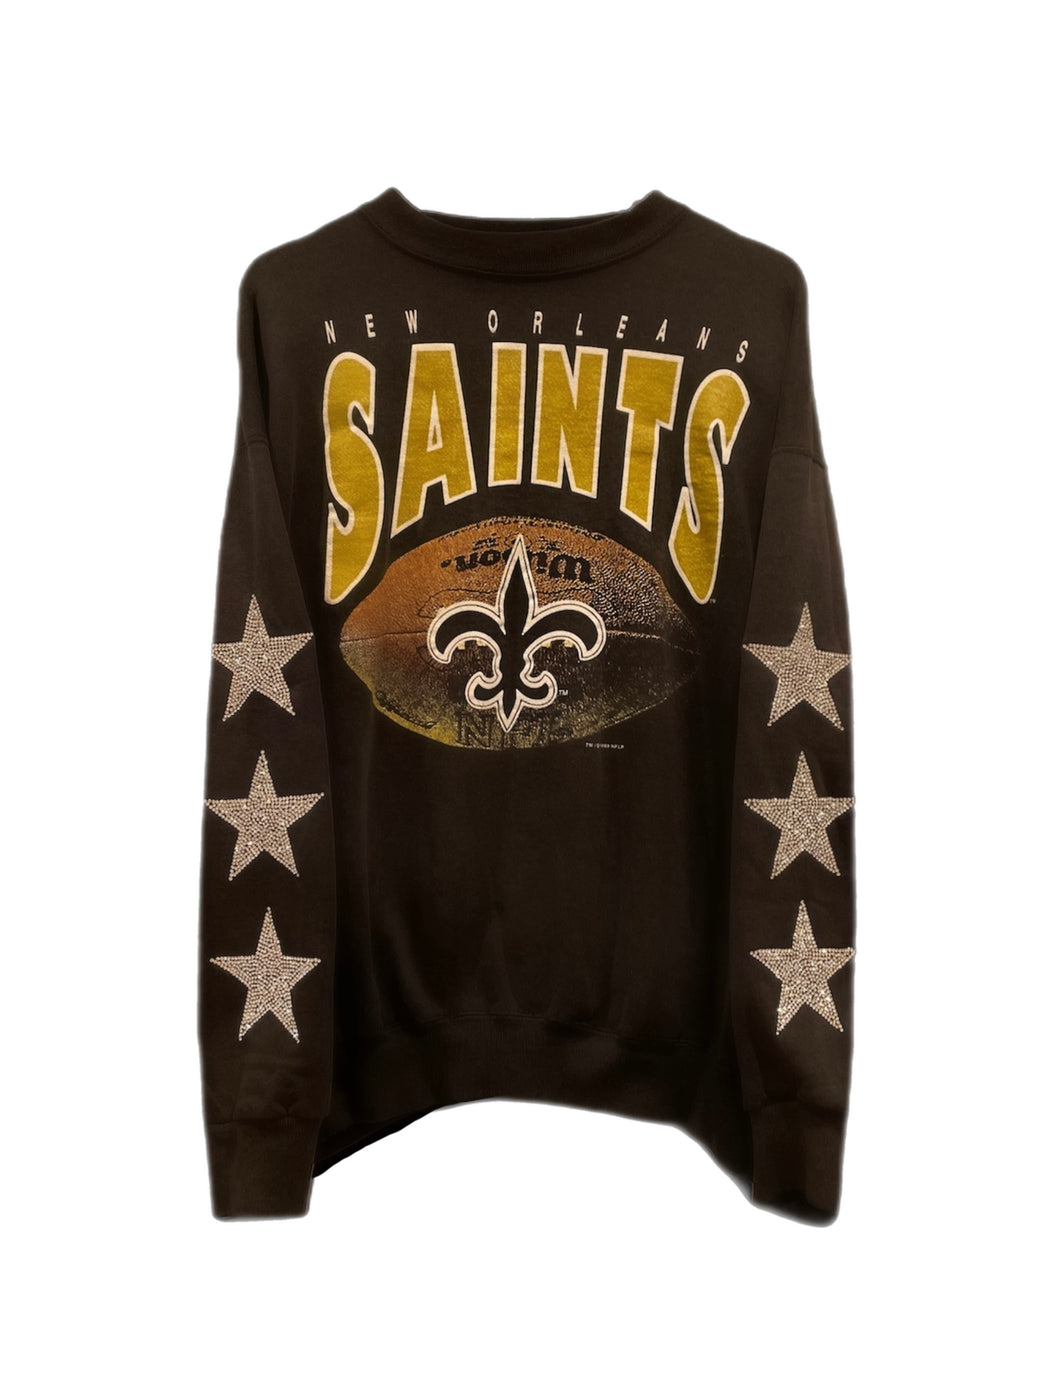 New Orleans Saints, NFL One of a KIND Vintage Sweatshirt with Three Crystal Star Design